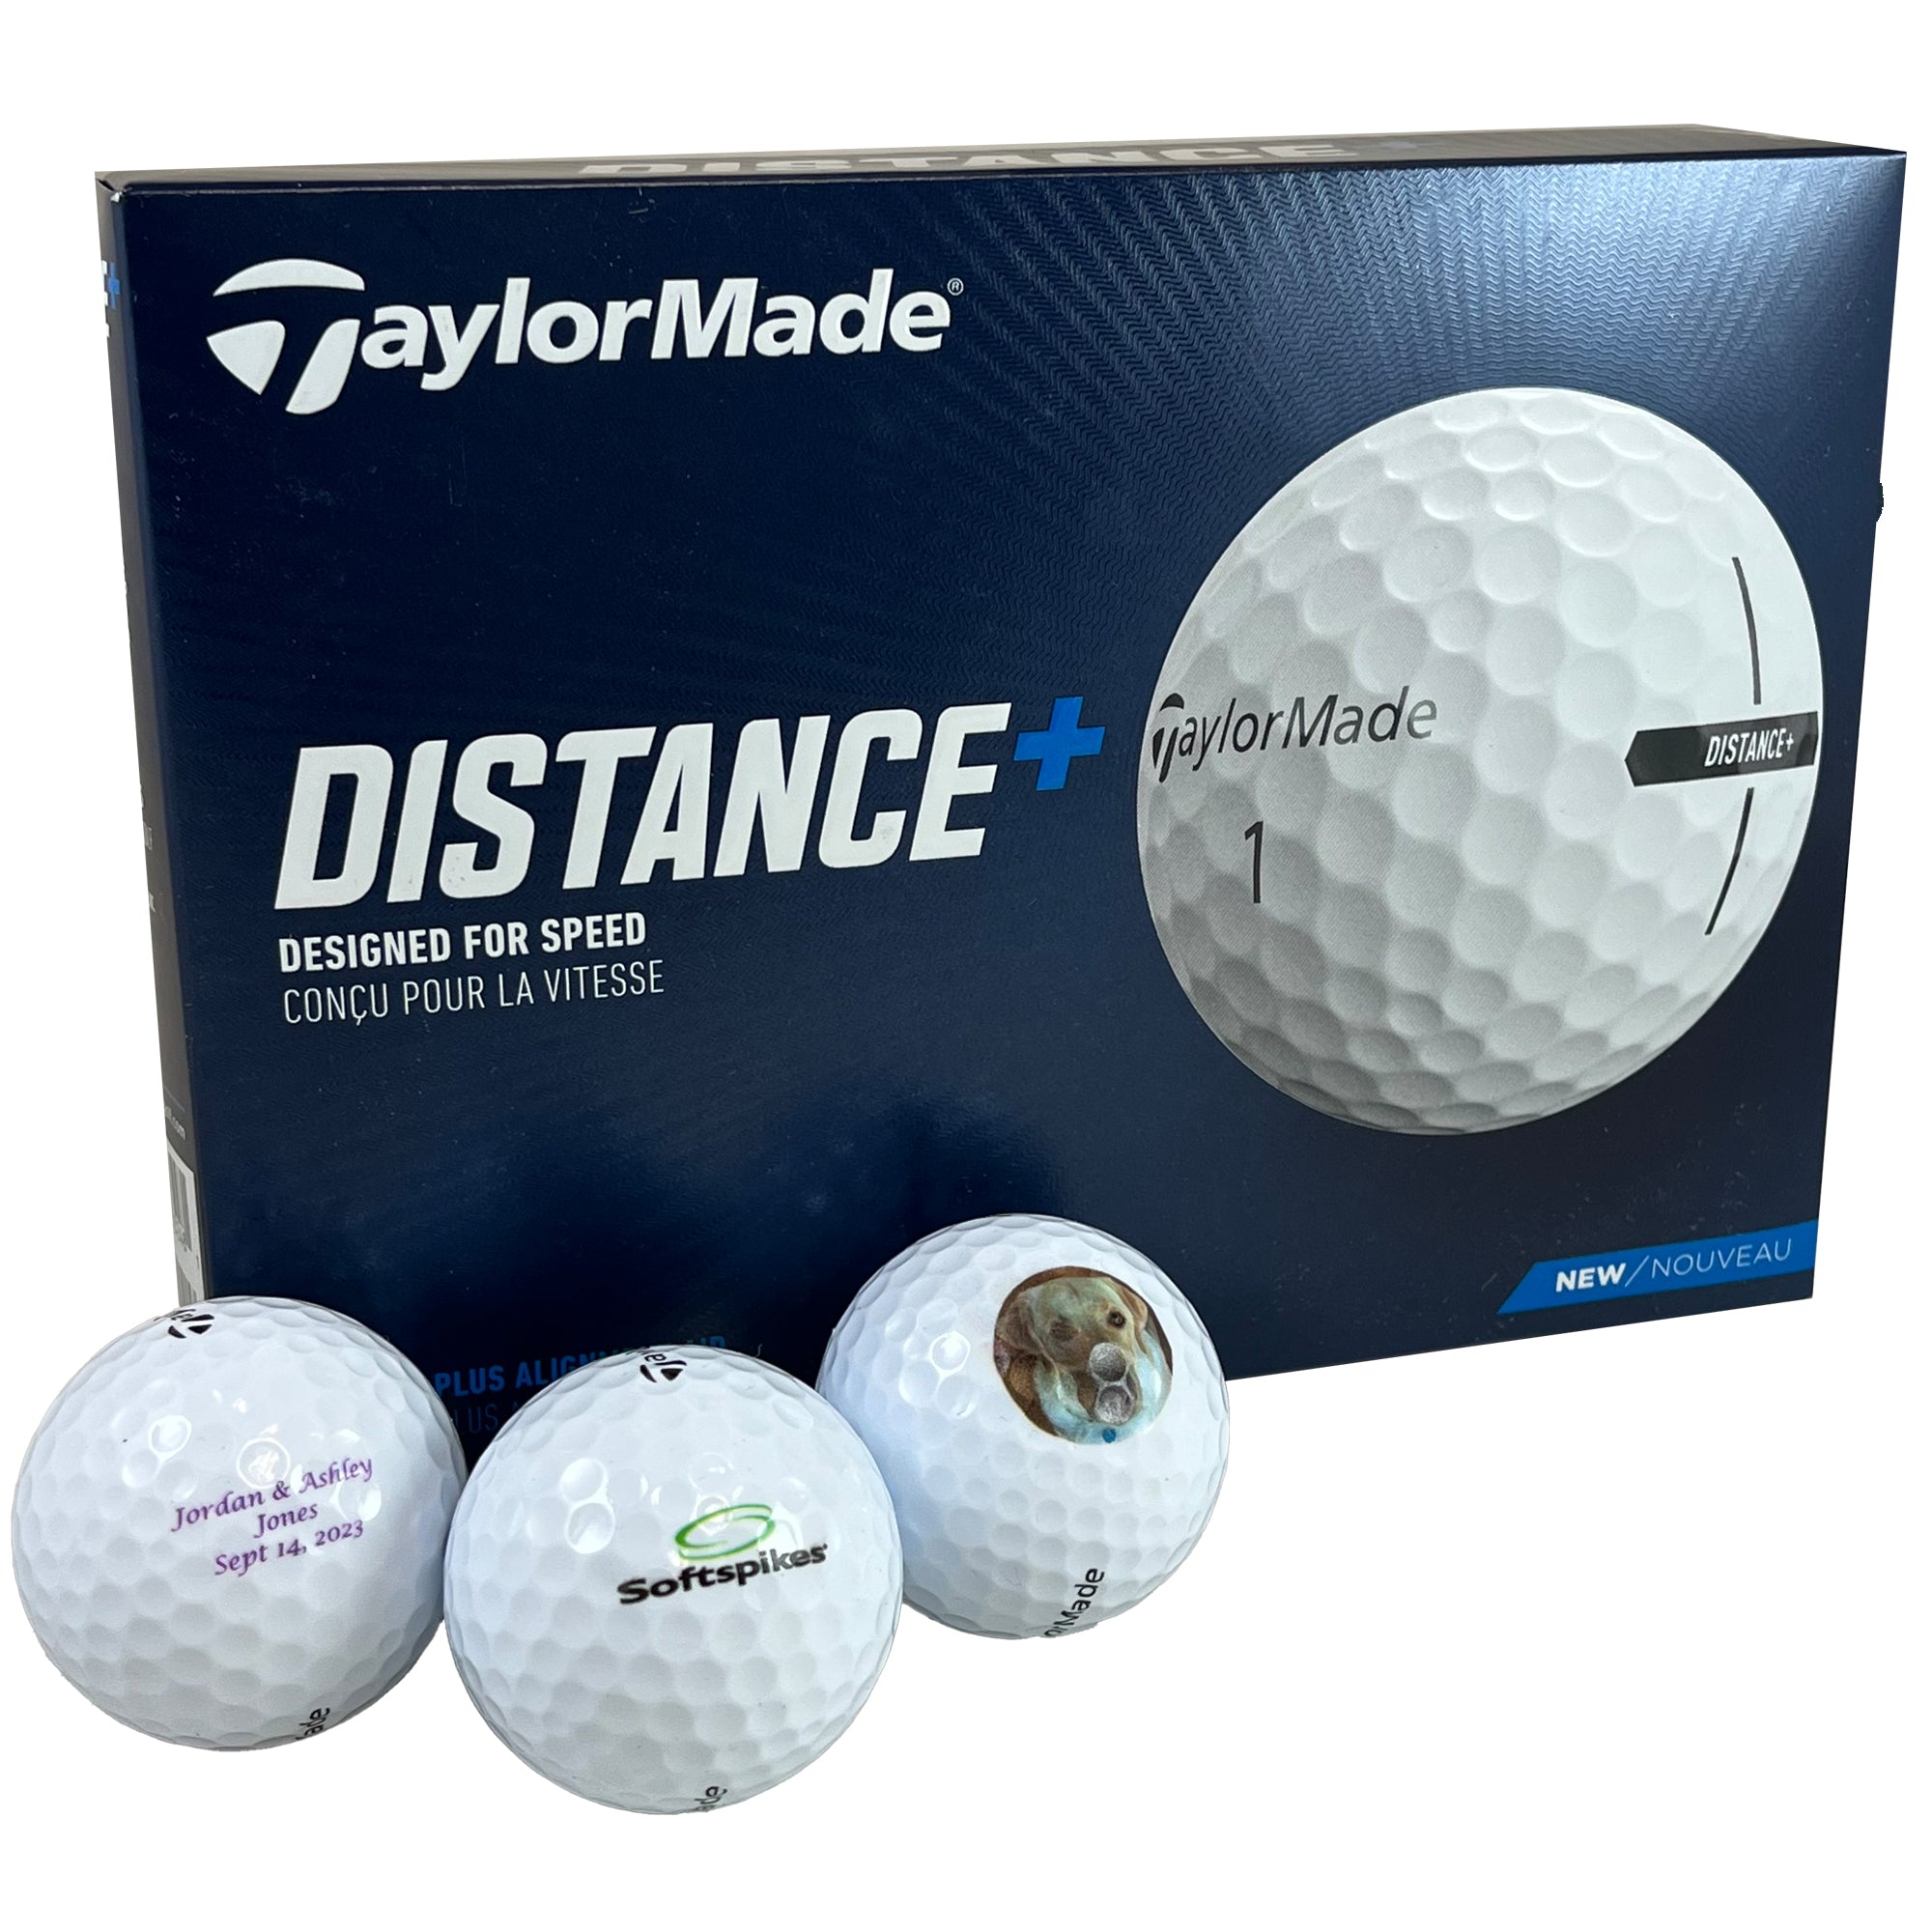 TaylorMade Distance+ • Custom Logo Imprint